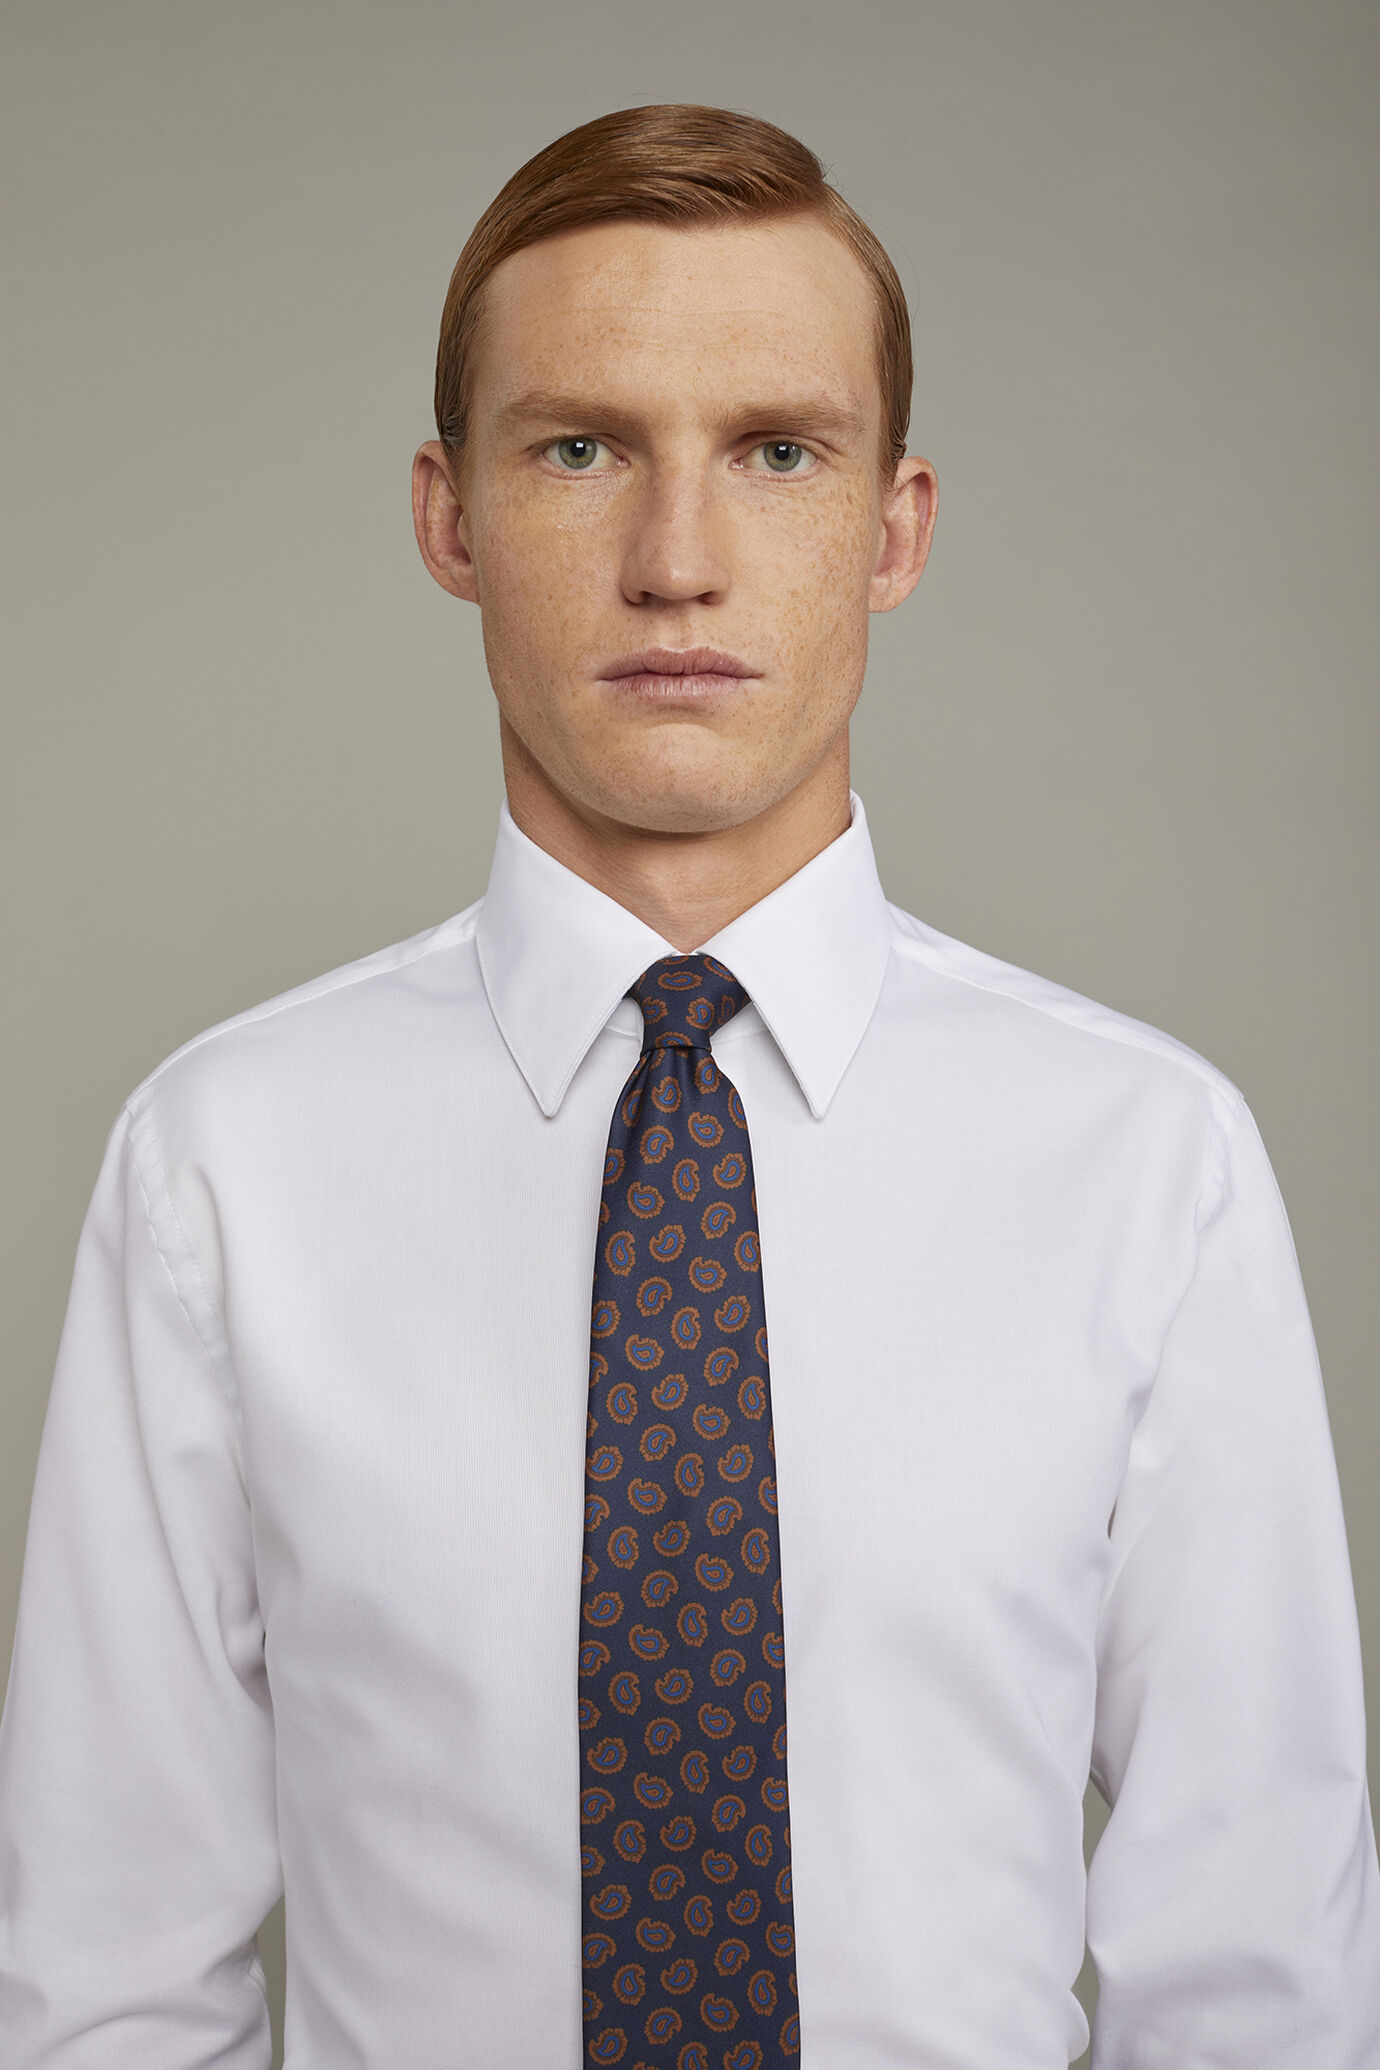 Men's shirt classic collar 100% cotton pinpoint fabric plain regualr fit image number 3